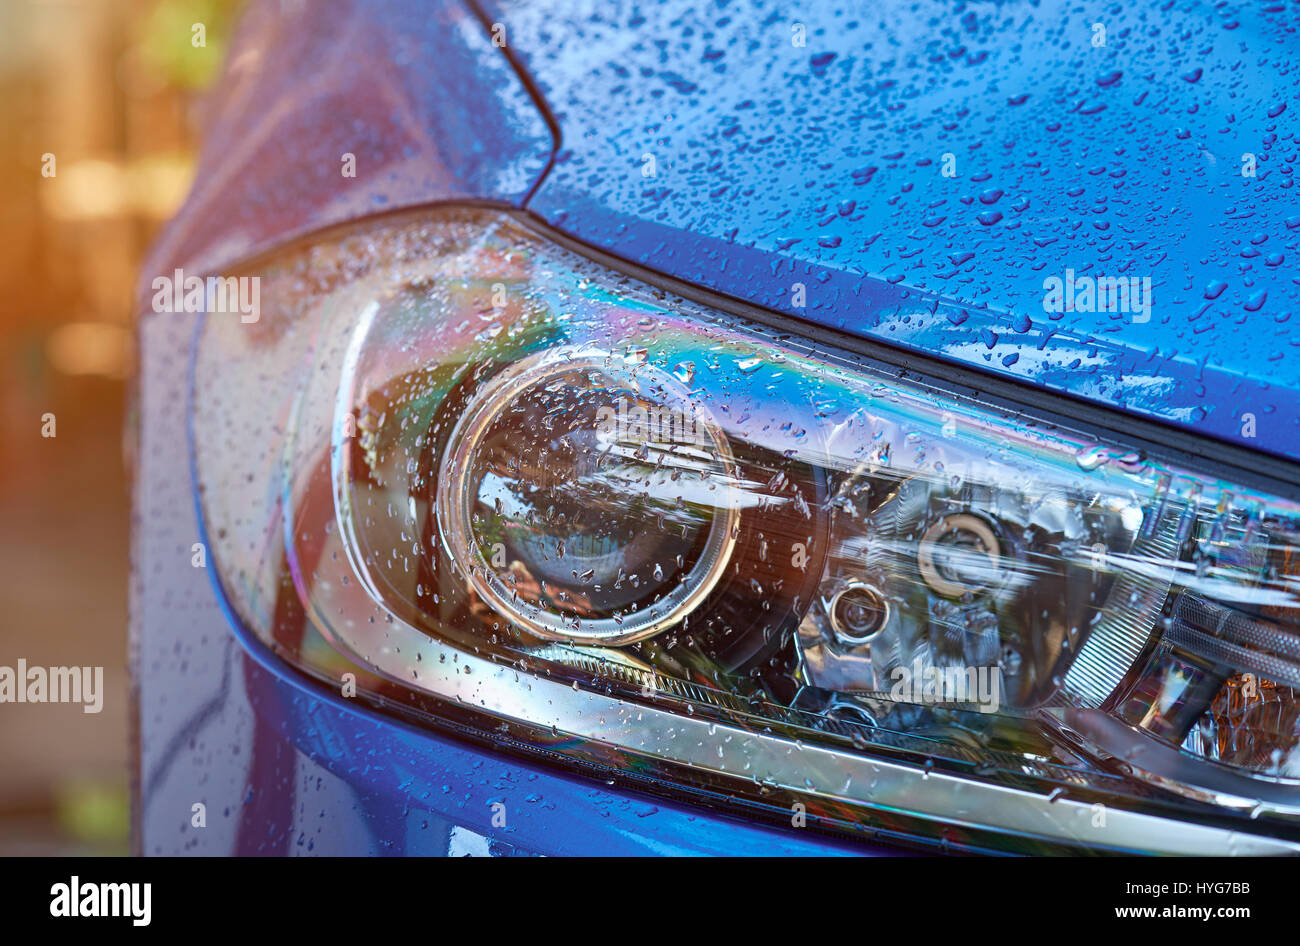 Wet blue car headlight close-up. Luxury car head light in rain drops water Stock Photo